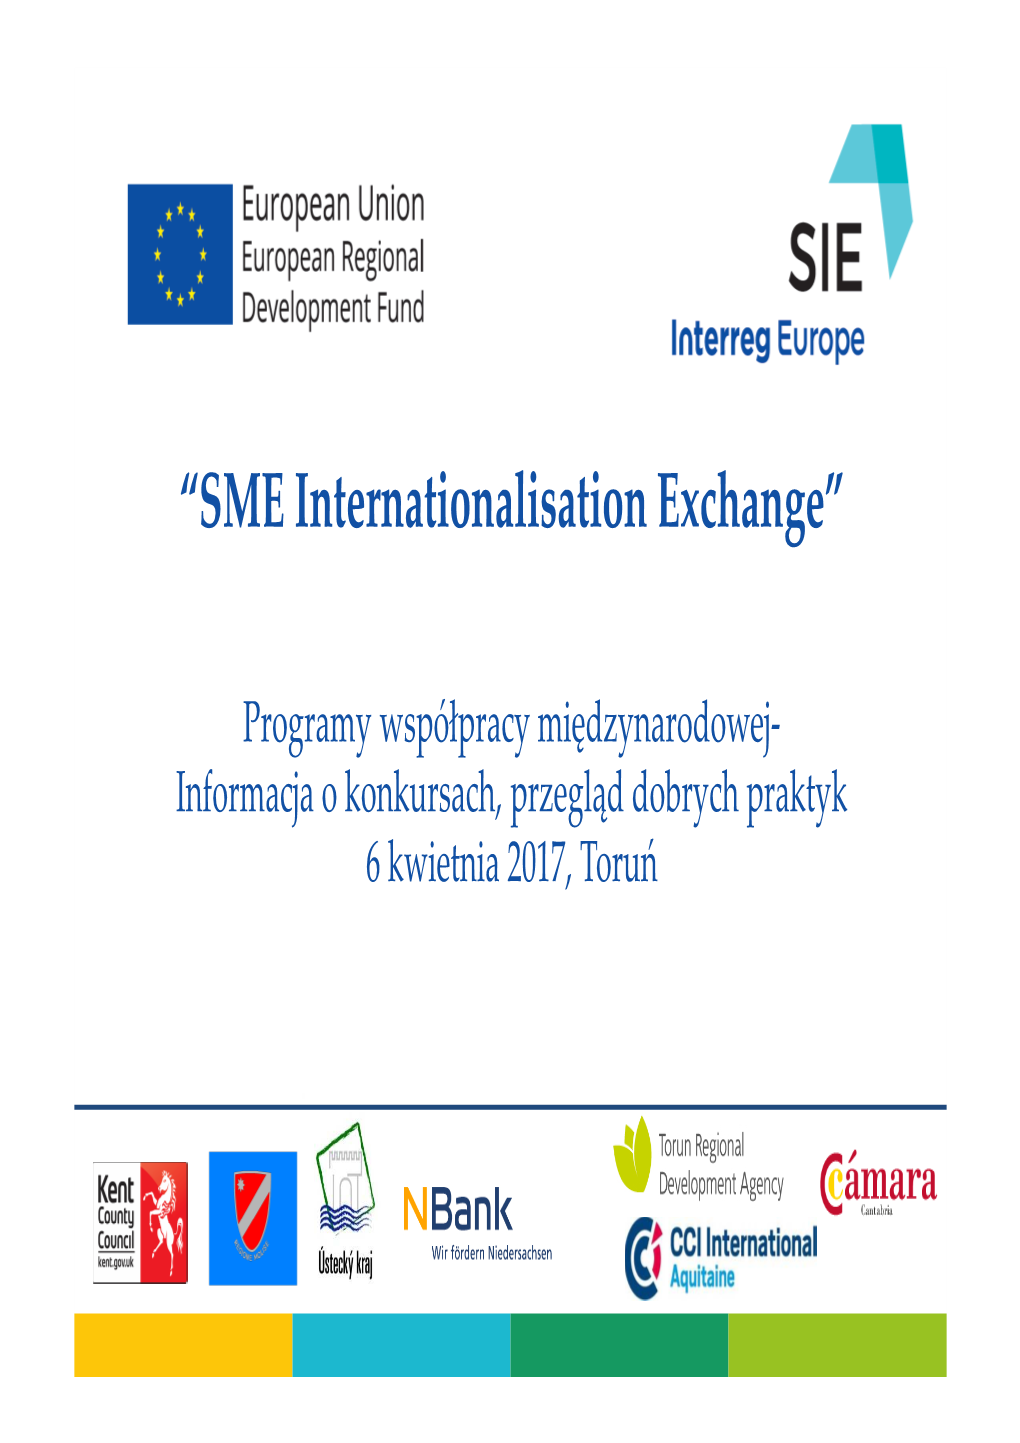 SIE Project SME Internationalisation Exchange 7 Kwietnia 2017